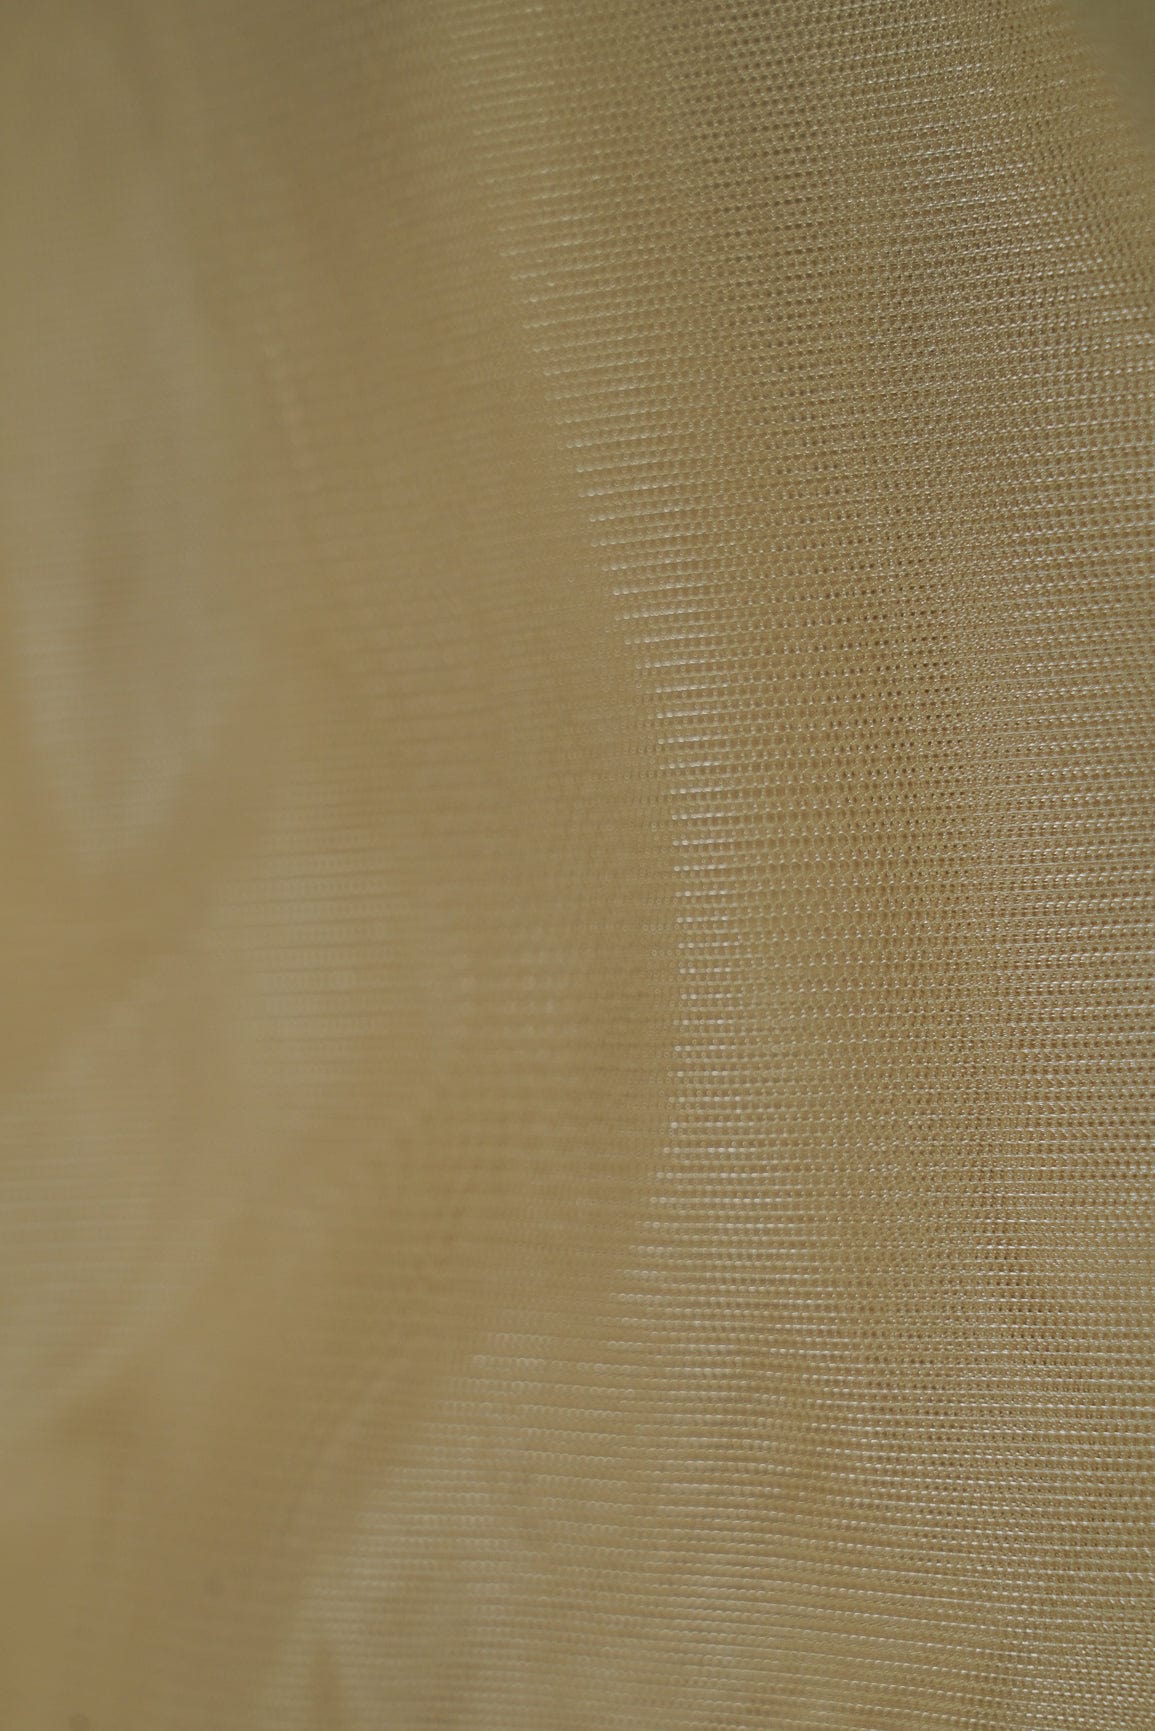 golden embroidered net fabric,golden embroidery fabric,silk net fabric,net fabric for blouse,net fabric pricev,net fabric for dupatta,embroidered net fabric wholesale